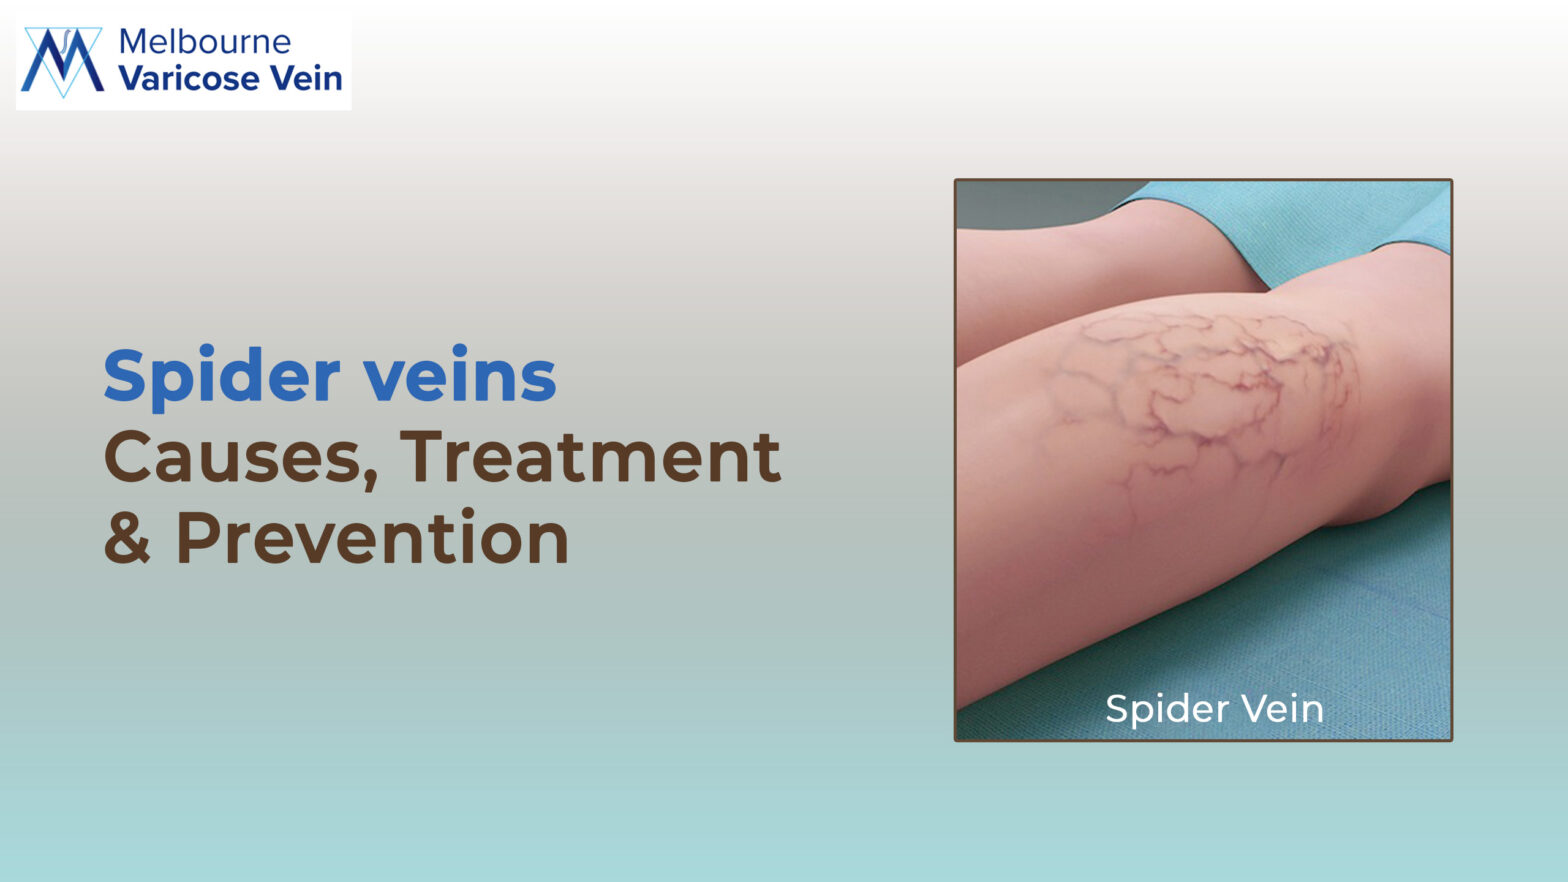 Spider veins: Causes, Treatment, & Prevention - Best Vein Varicose Clinic in Victoria Melbourne